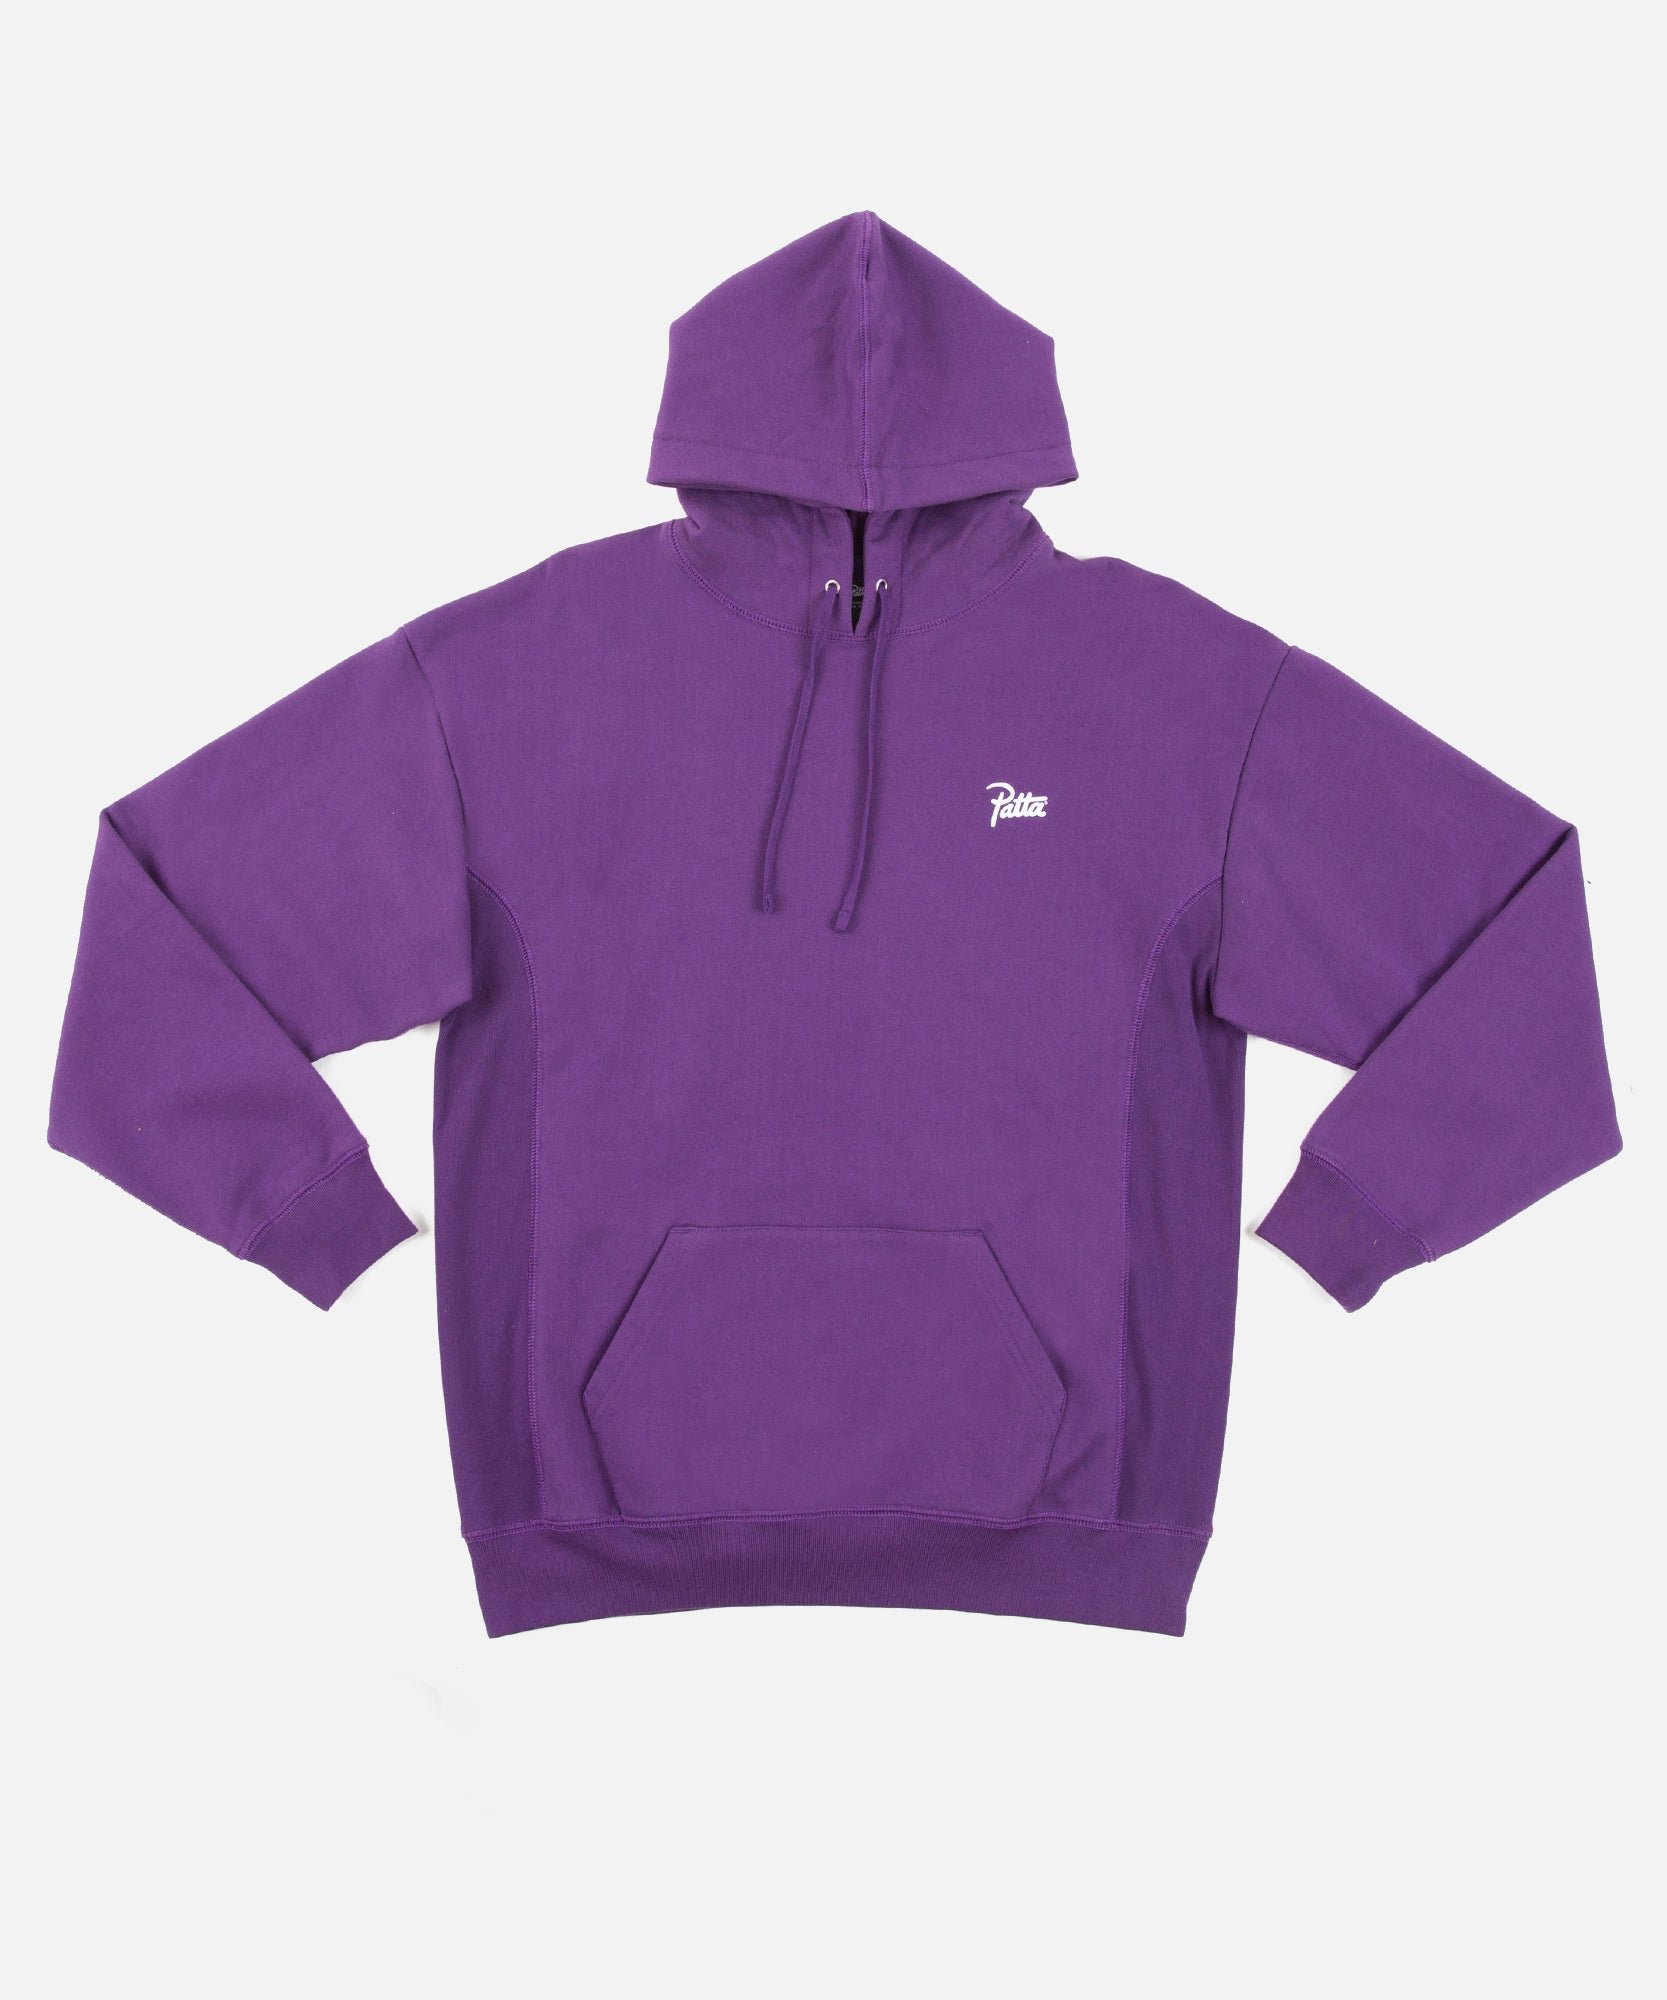 patta purple